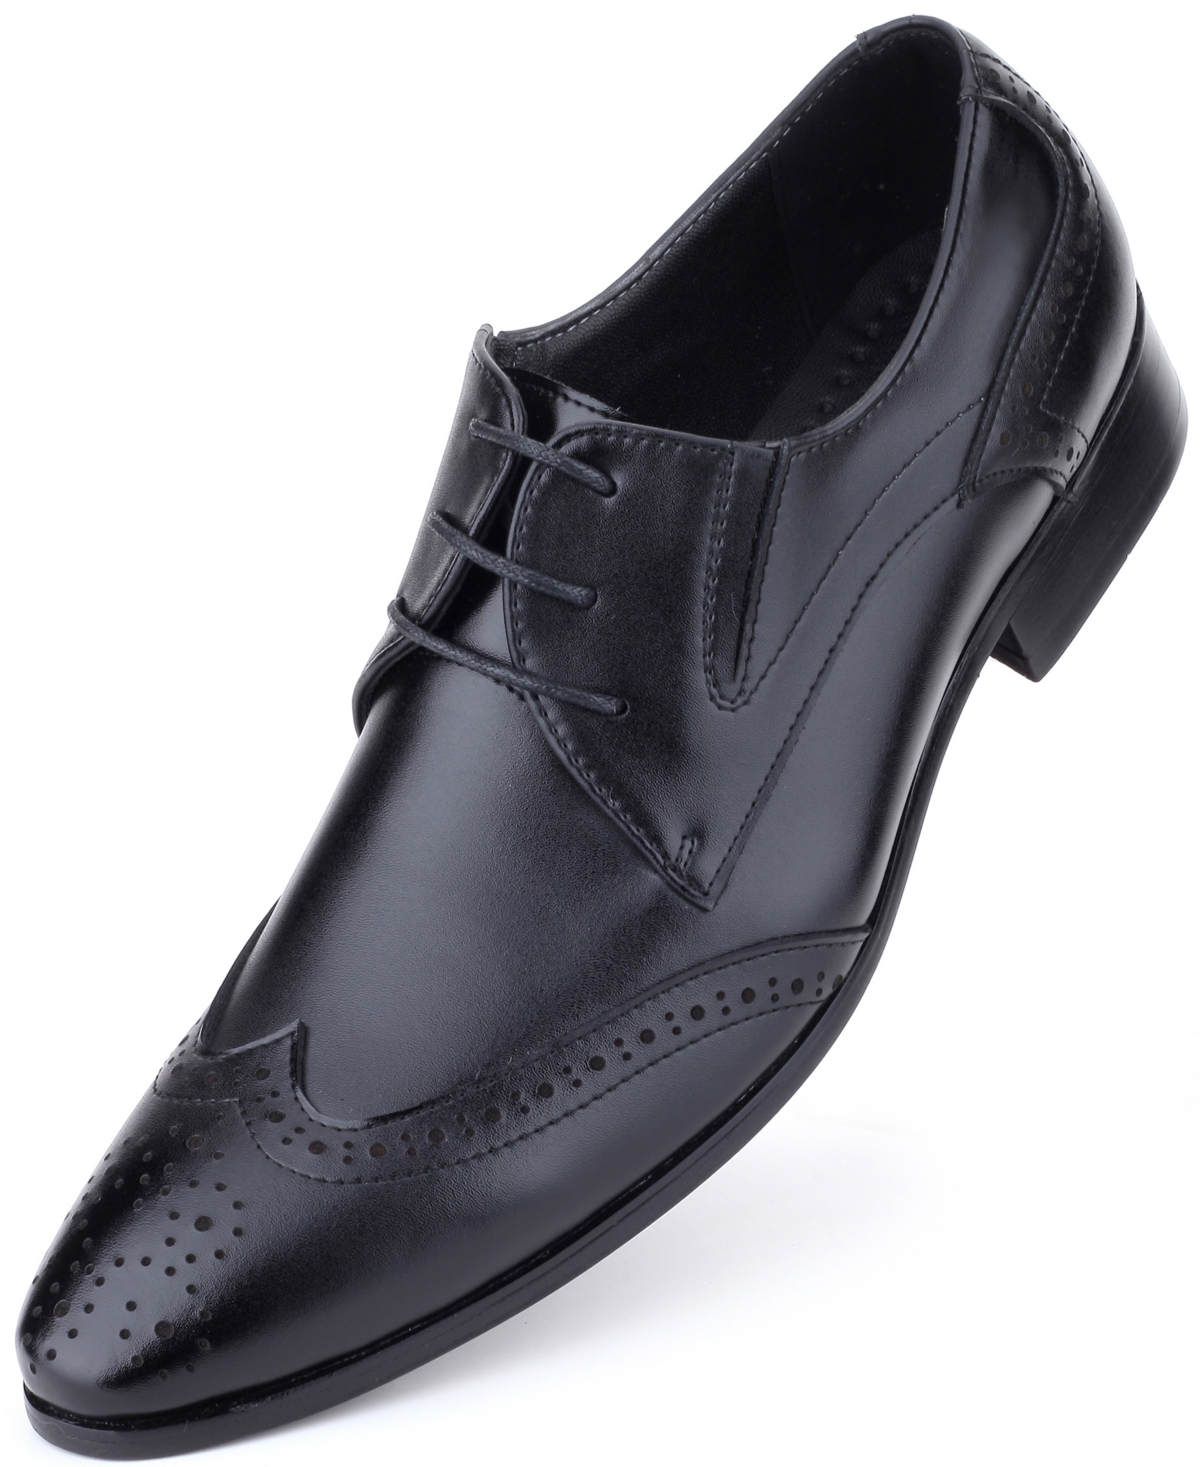 Men's Longwing Brogue Oxford Shoes - Black